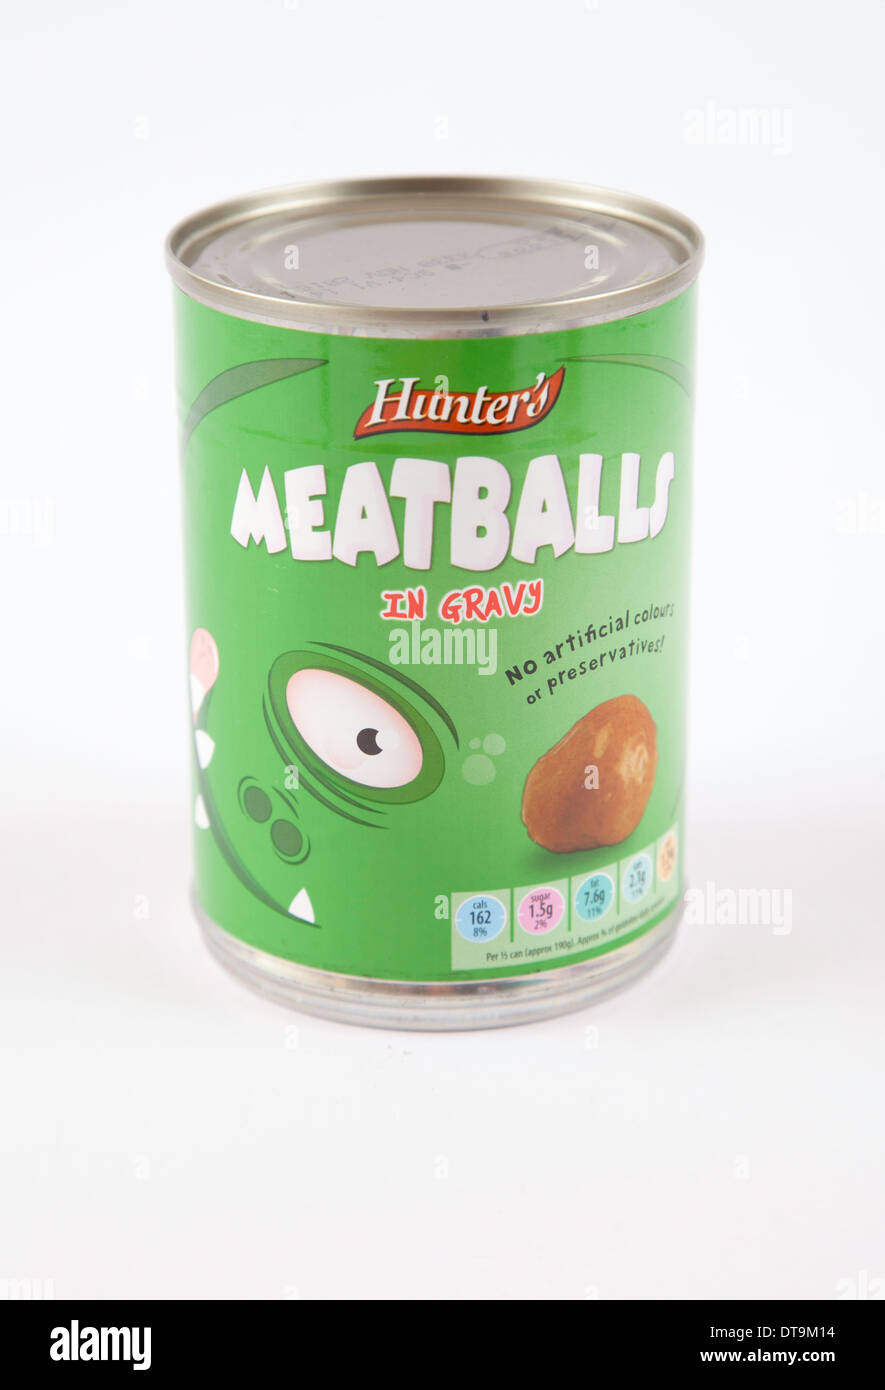 Tin of Hunter's Meatballs in Gravy on White Background Stock Photo